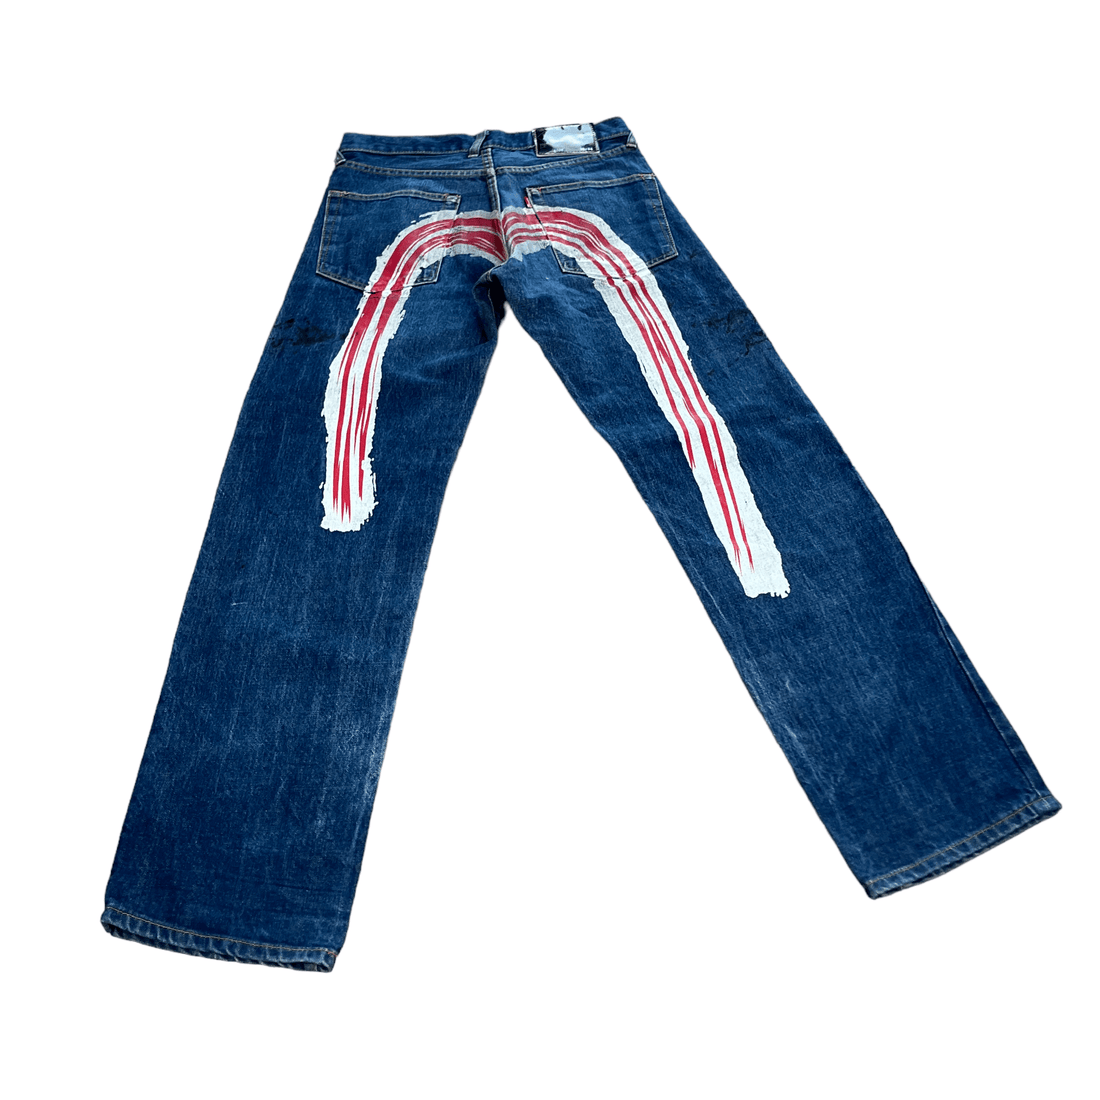 Vintage Evisu Jeans - 30” x 34” - The Streetwear Studio